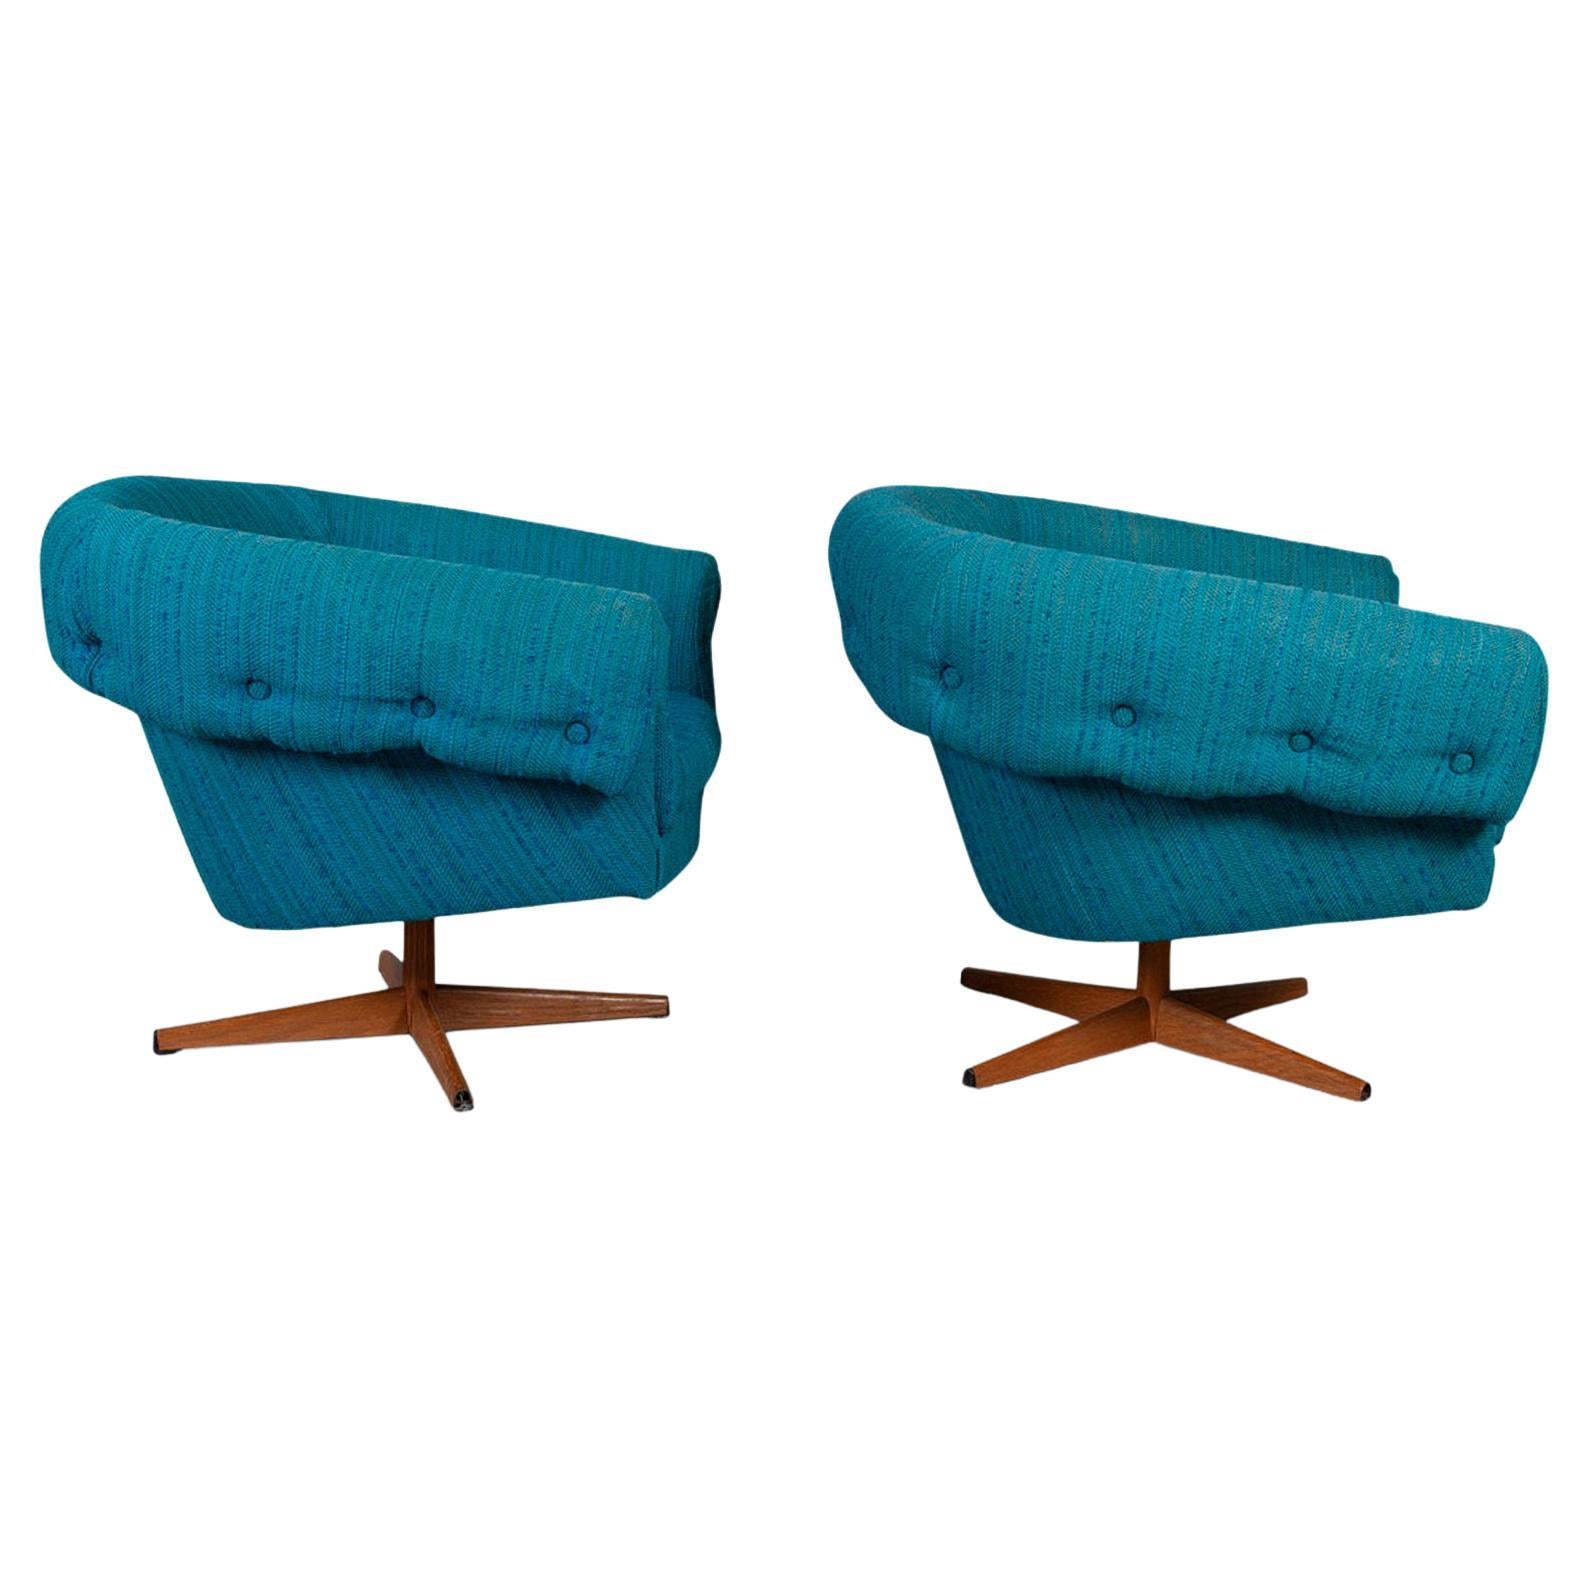 Pair of Swedish Modern Swivel Chairs in Original Blue Wool